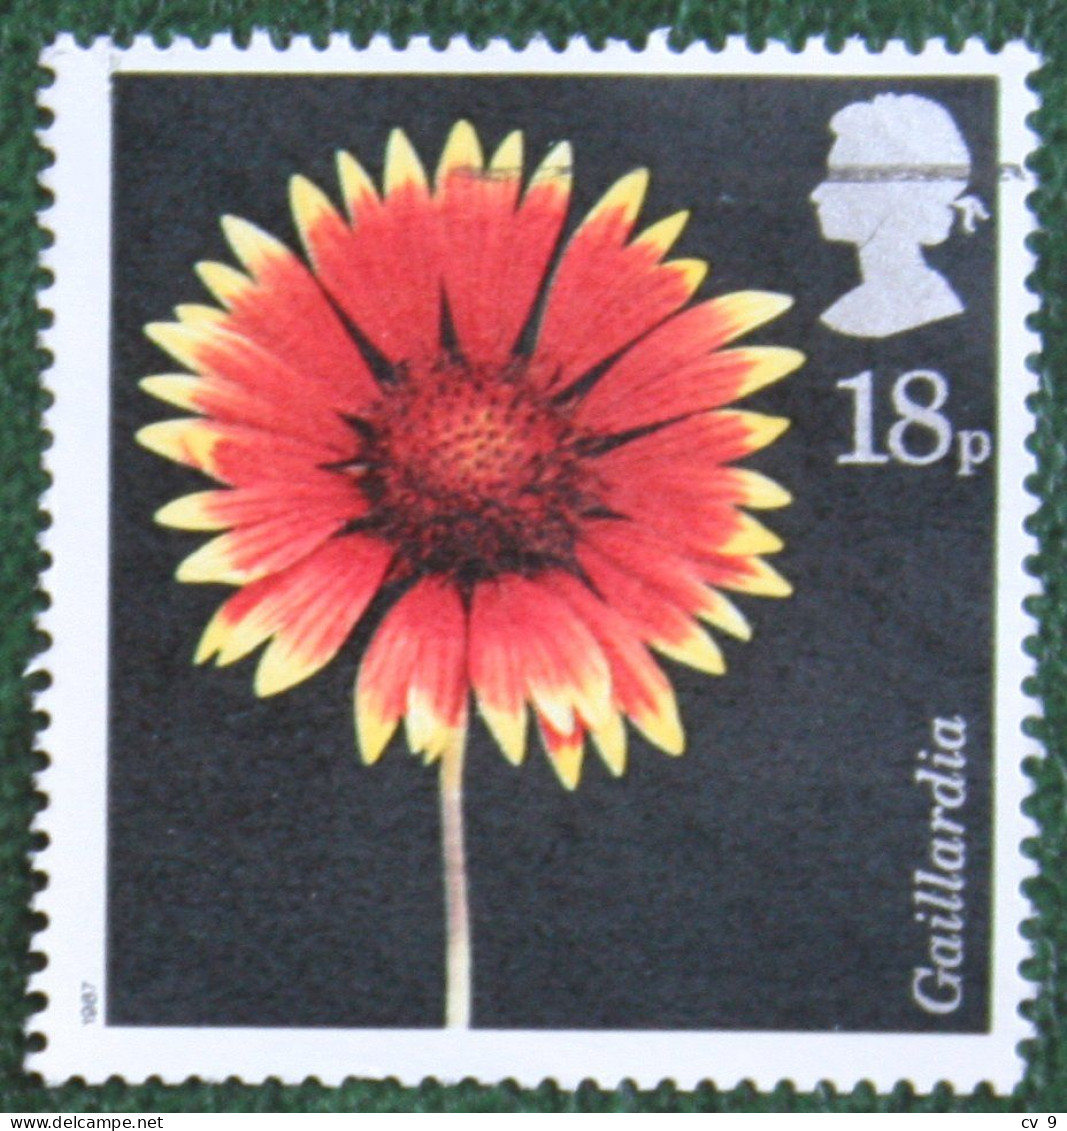 FLOWERS Fleur Blumen (Mi 1097) 1987 Used Gebruikt Oblitere ENGLAND GRANDE-BRETAGNE GB GREAT BRITAIN - Usados